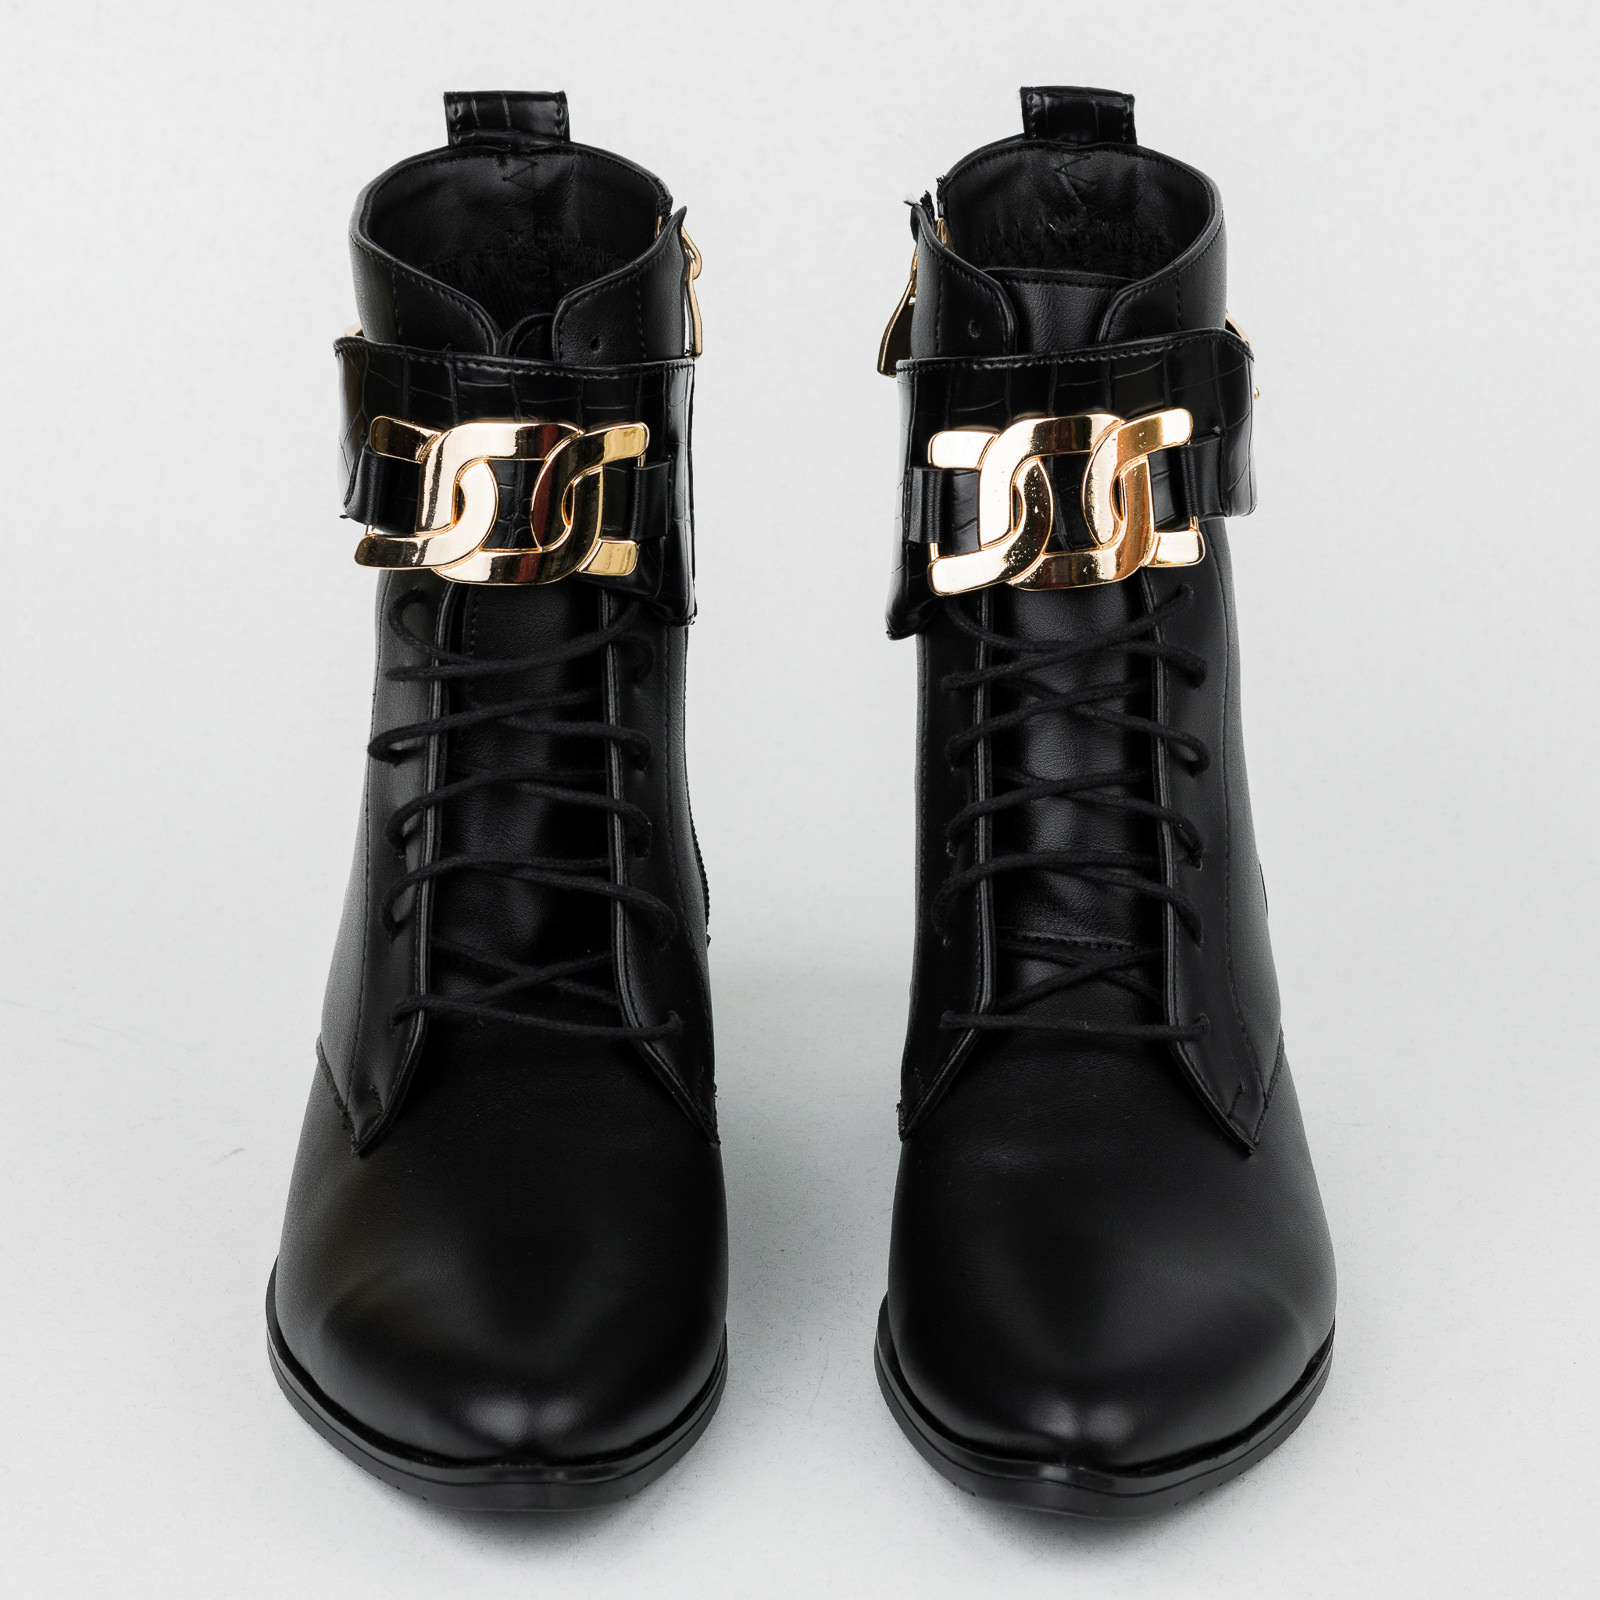 Women ankle boots B413 - BLACK